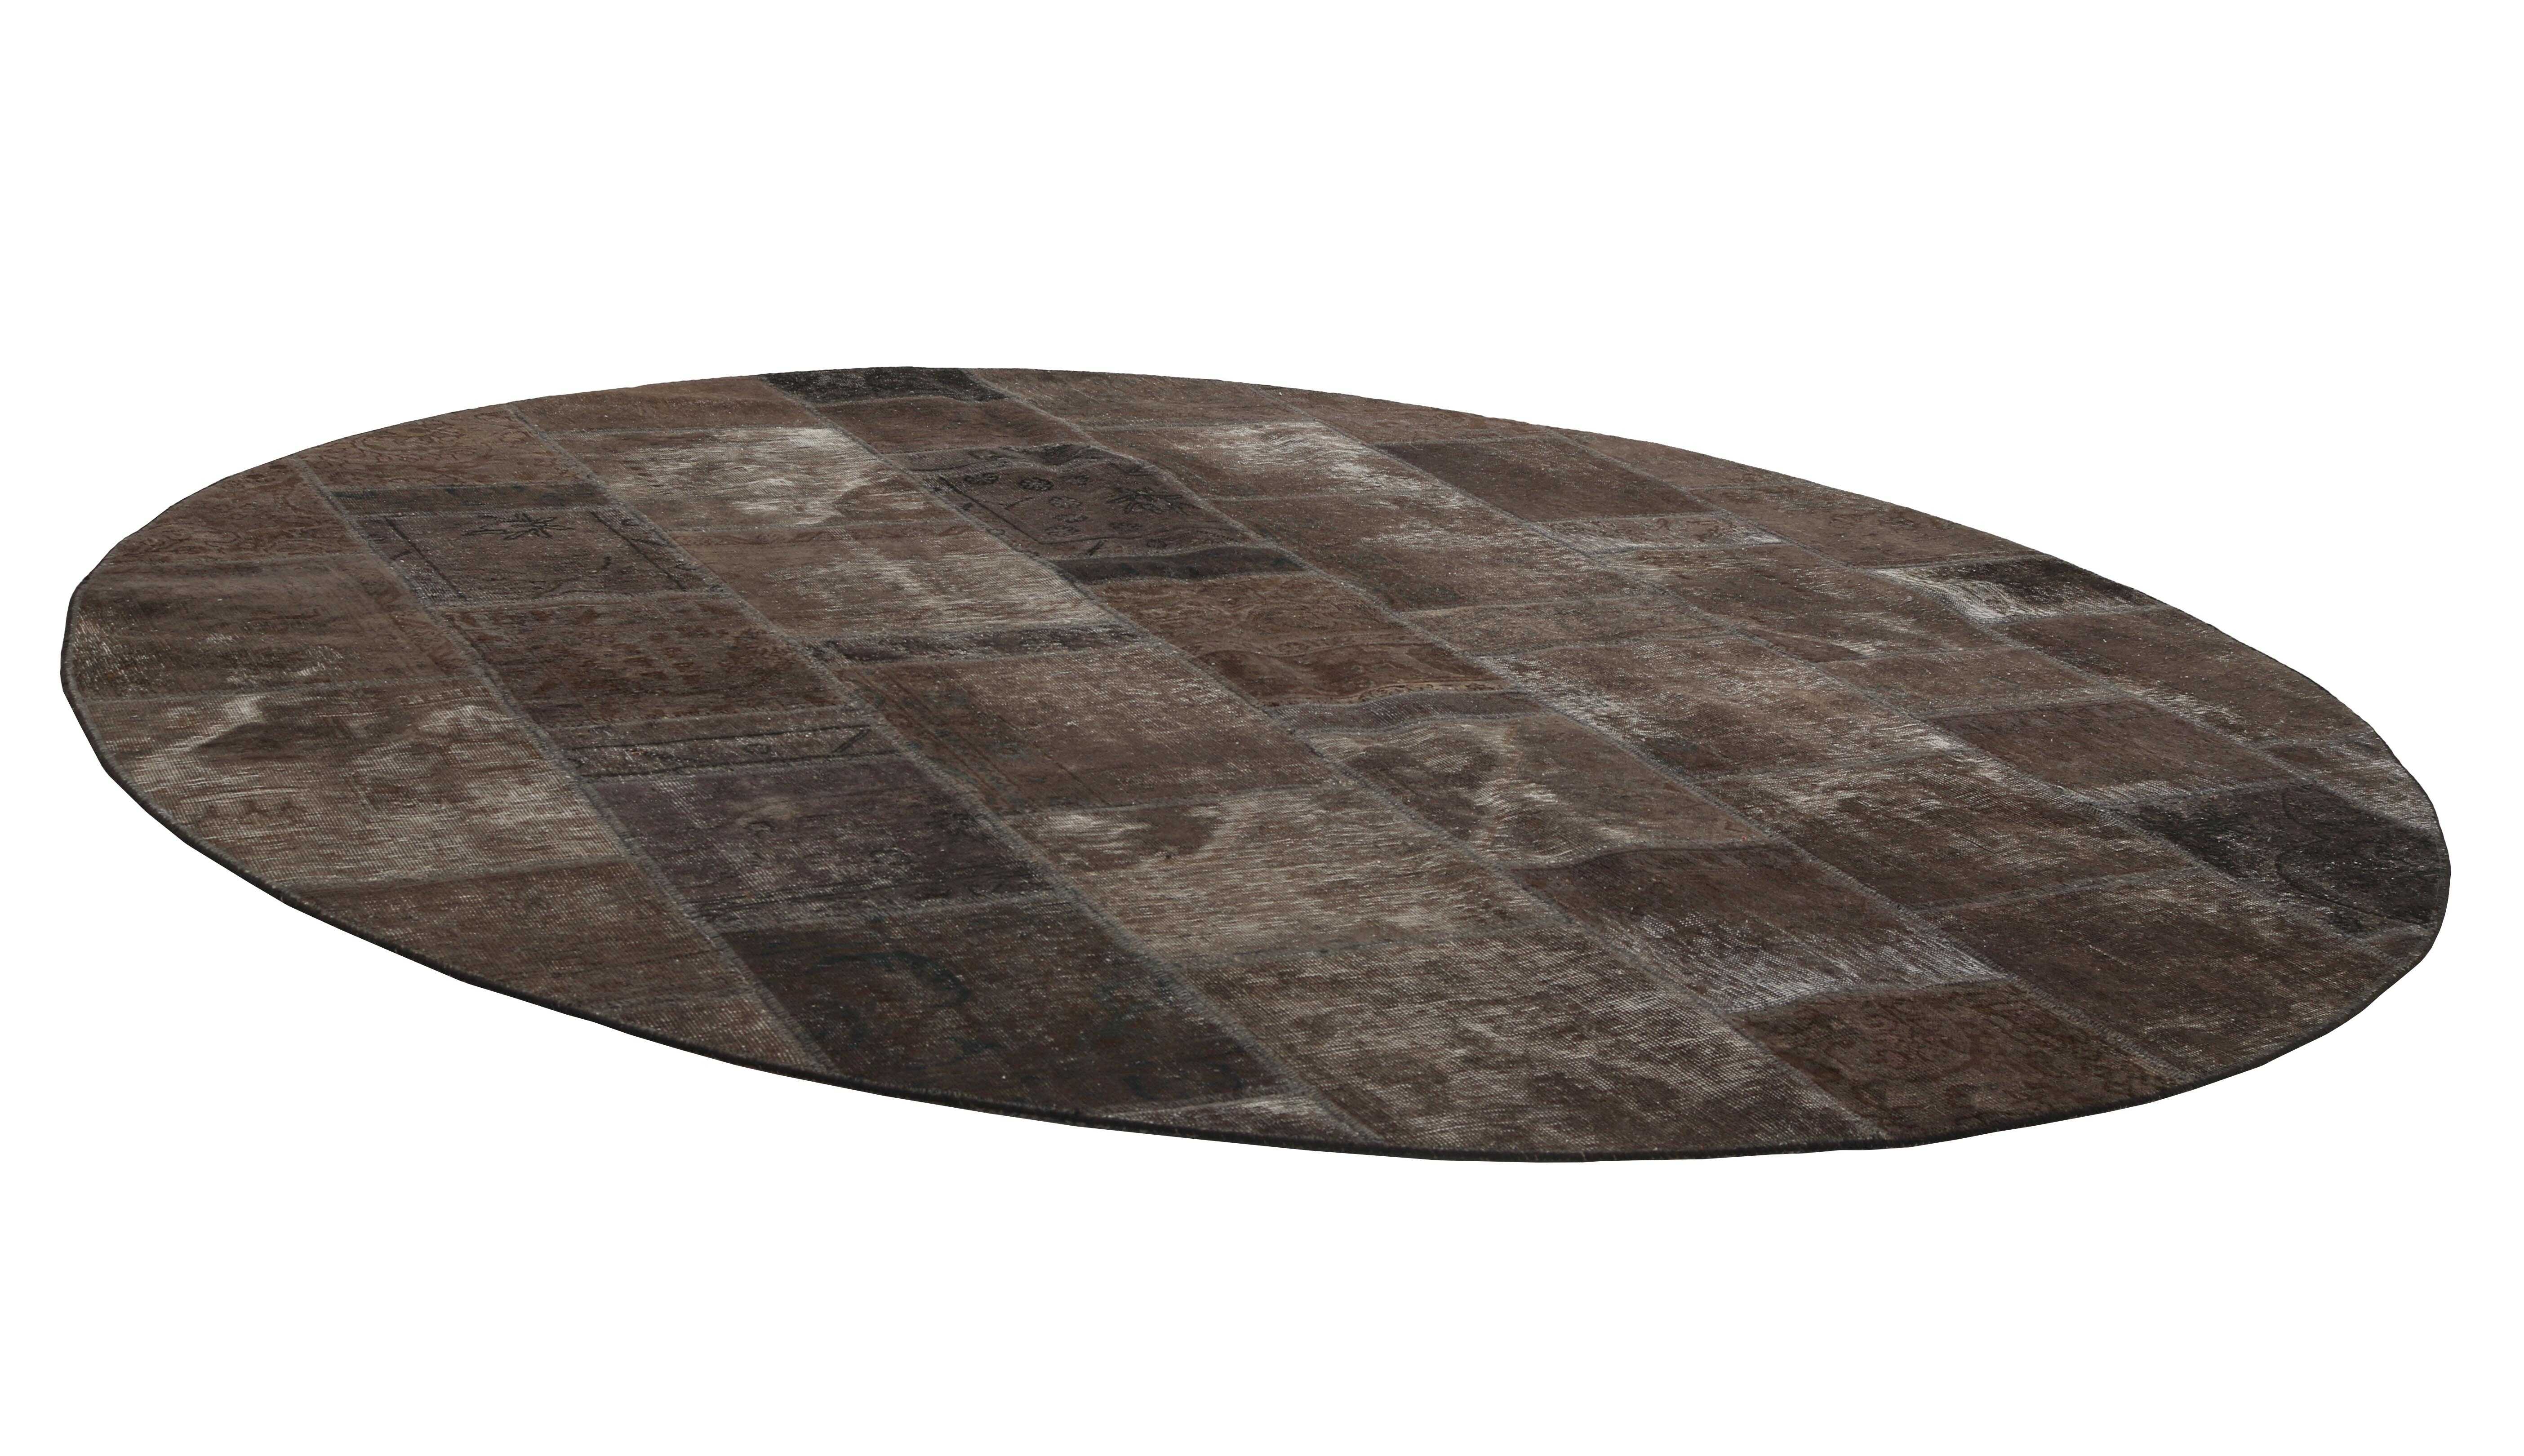 Authentic black patchwork persian circle rug